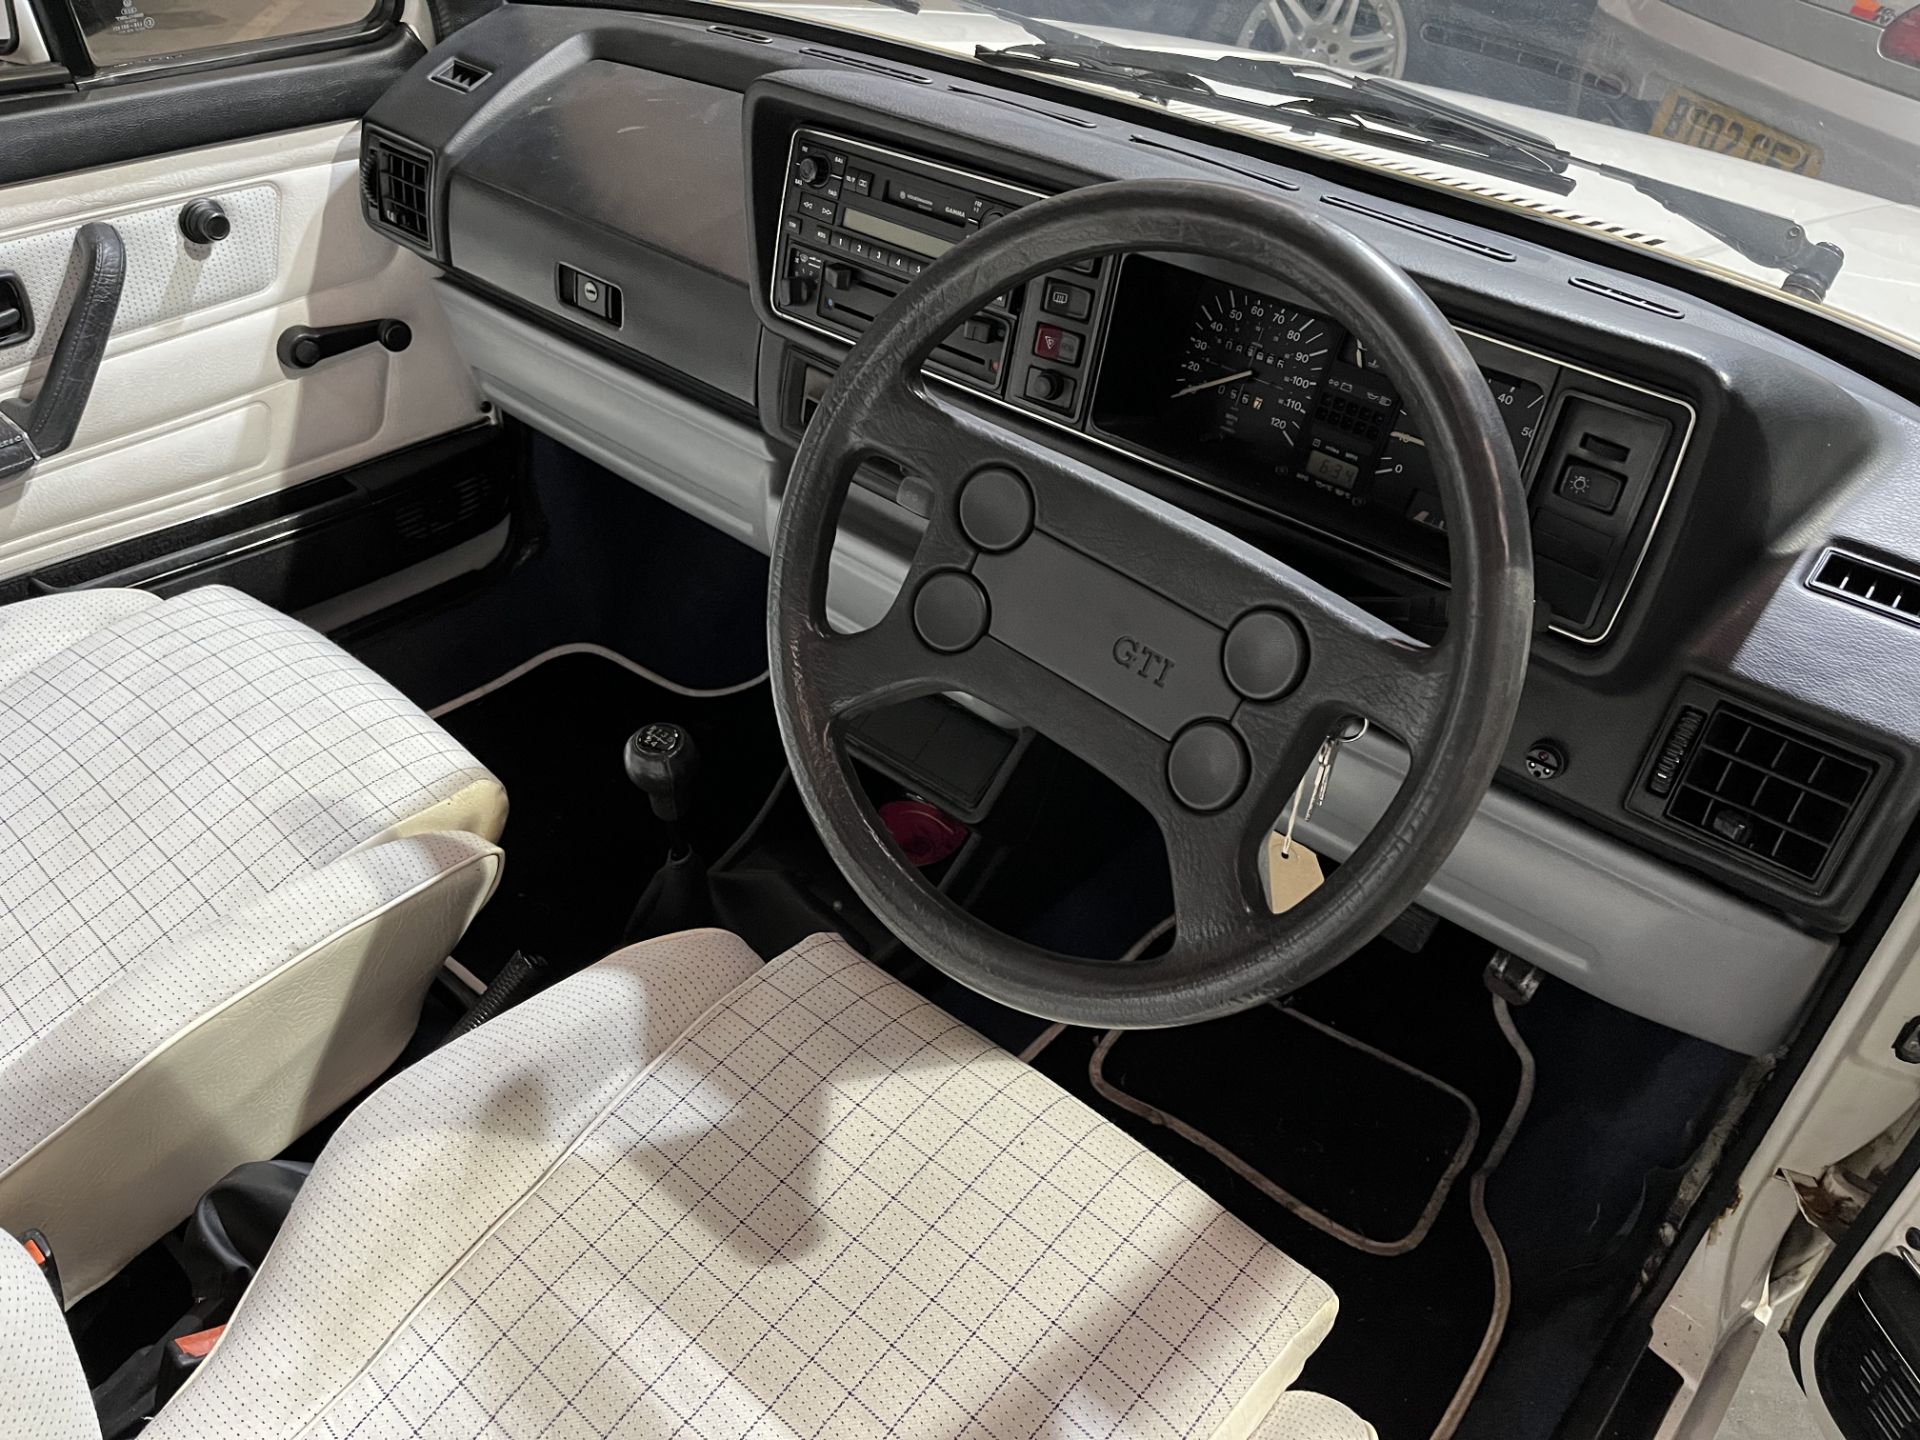 1989 Volkswagen Golf GTI Cabriolet - 1800cc - Image 15 of 24